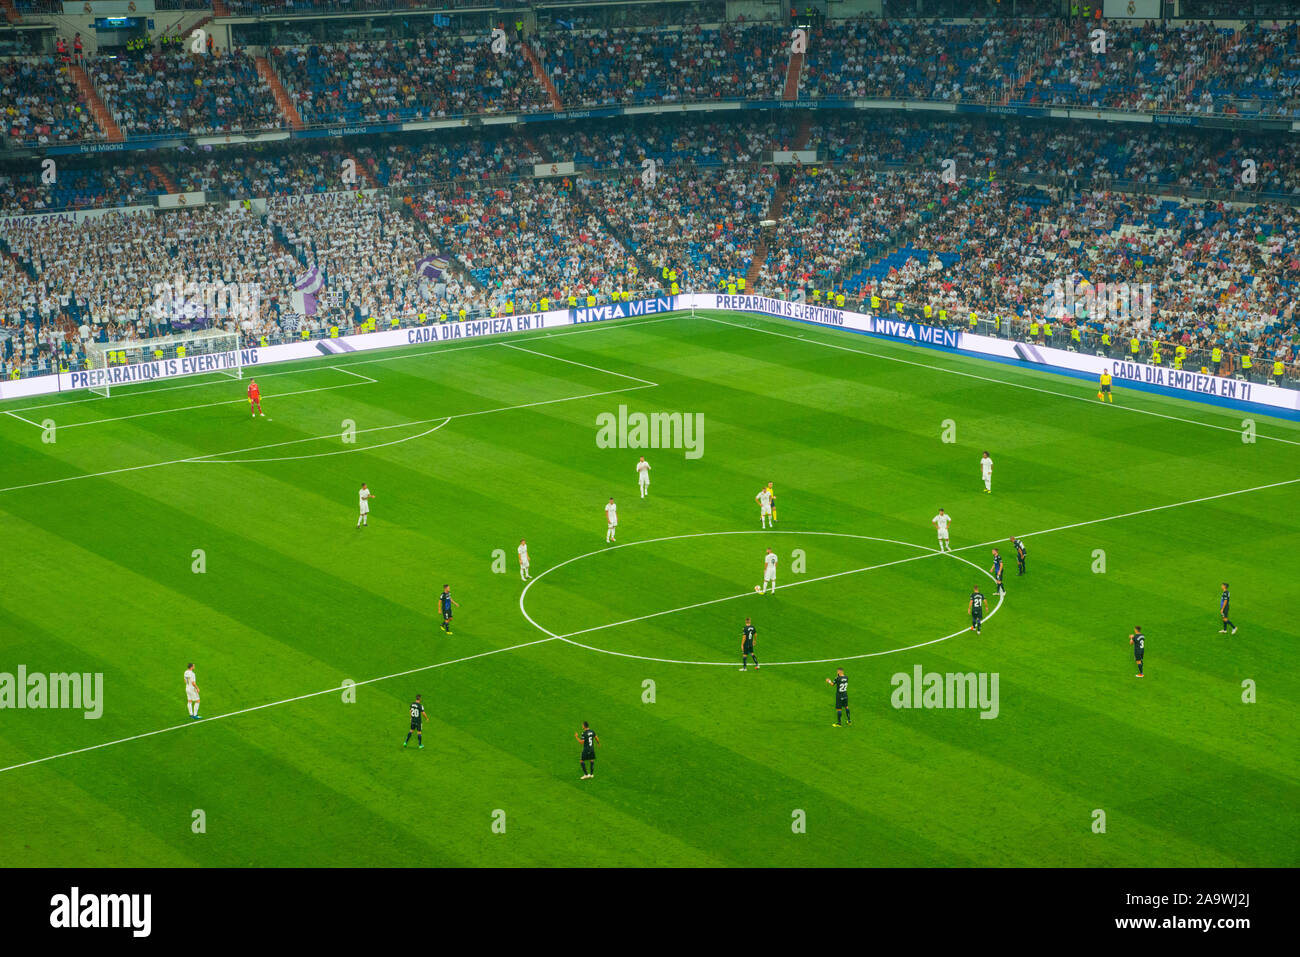 Real Madrid - Getafe football match, kickoff. Santiago Bernabeu, Madrid, Espagne. Banque D'Images